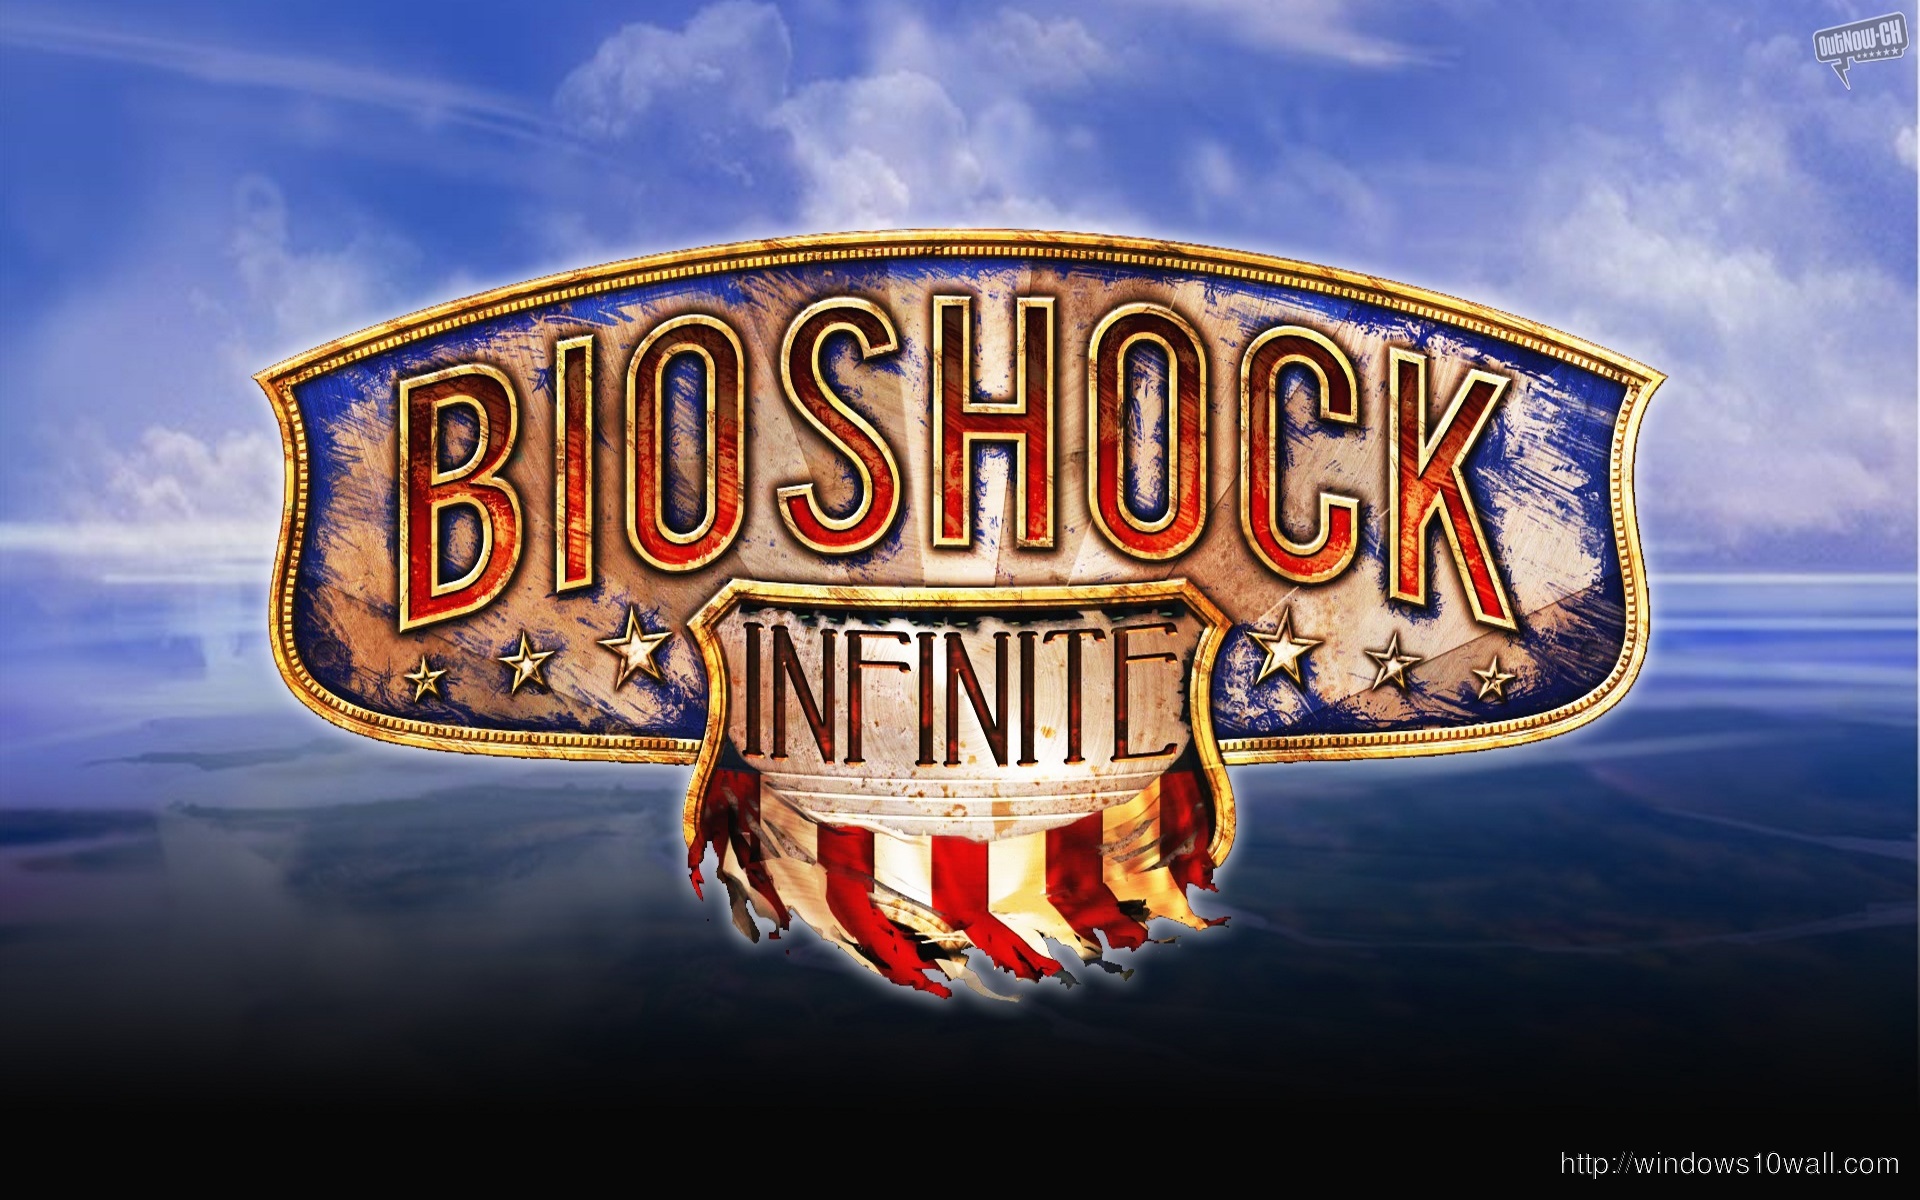 Bioshock Infinite wallpaper free download